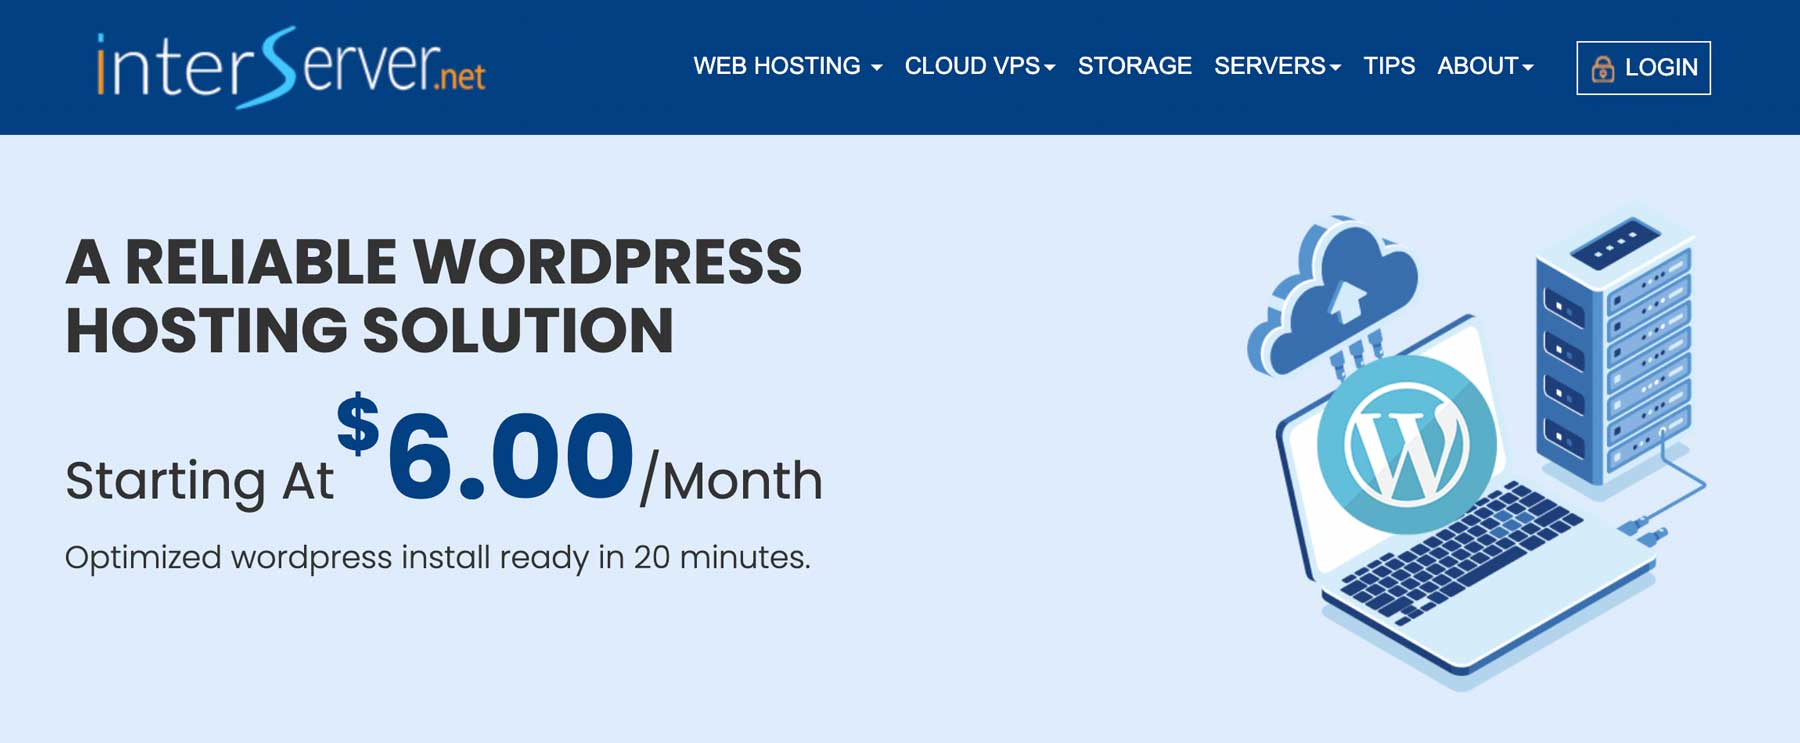 Interserver WordPress VPS hosting